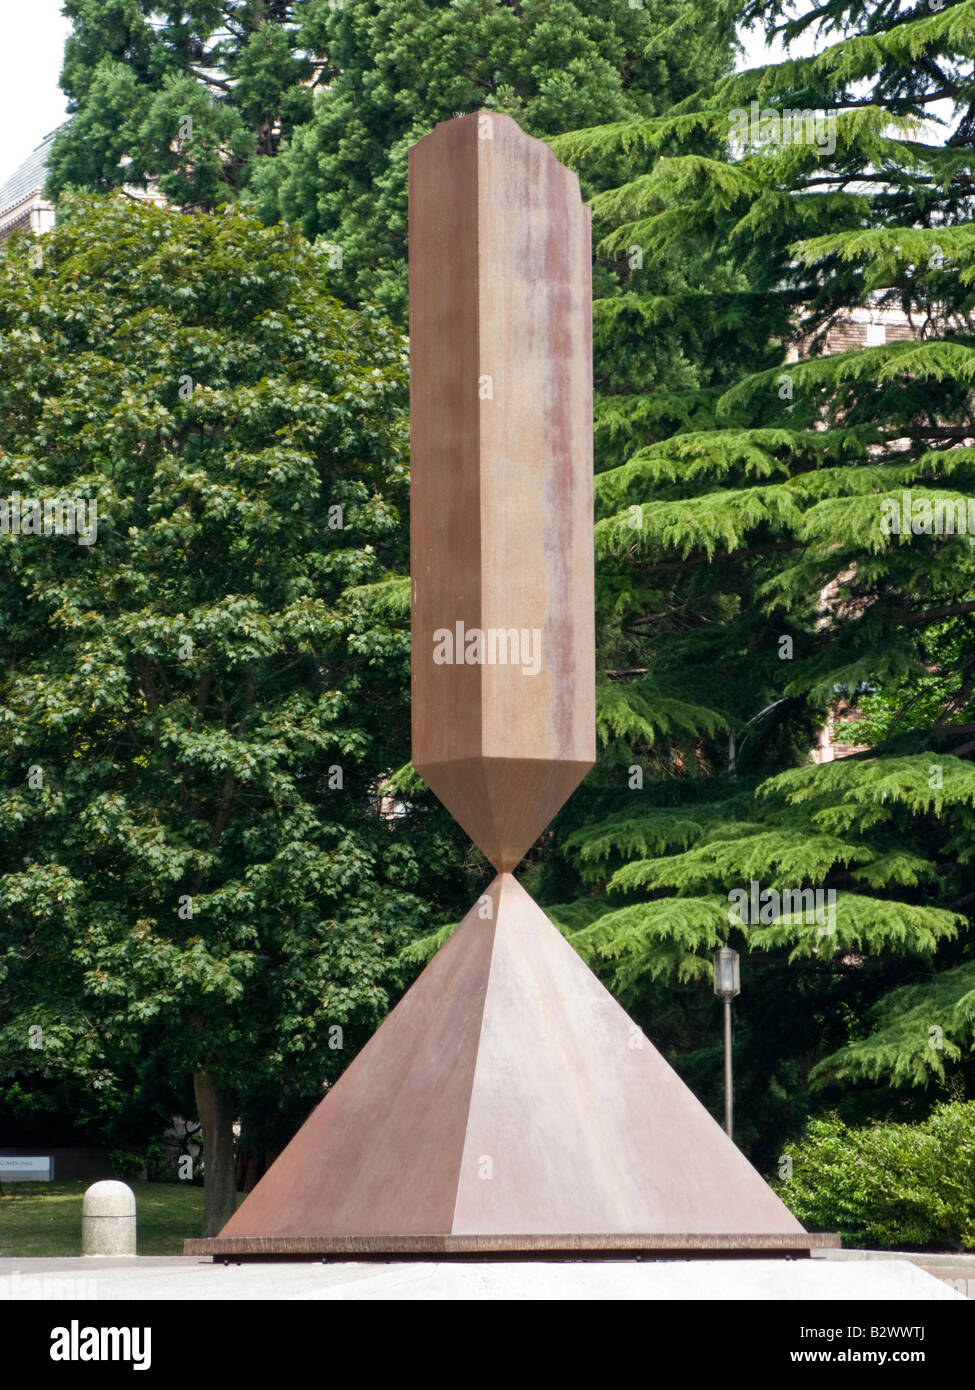 Barnett Newman (1905-1970), Broken Obelisk, gift of the Virginia Wright fund, 2001, Red Square, University of Washington Seattle campus Stock Photo